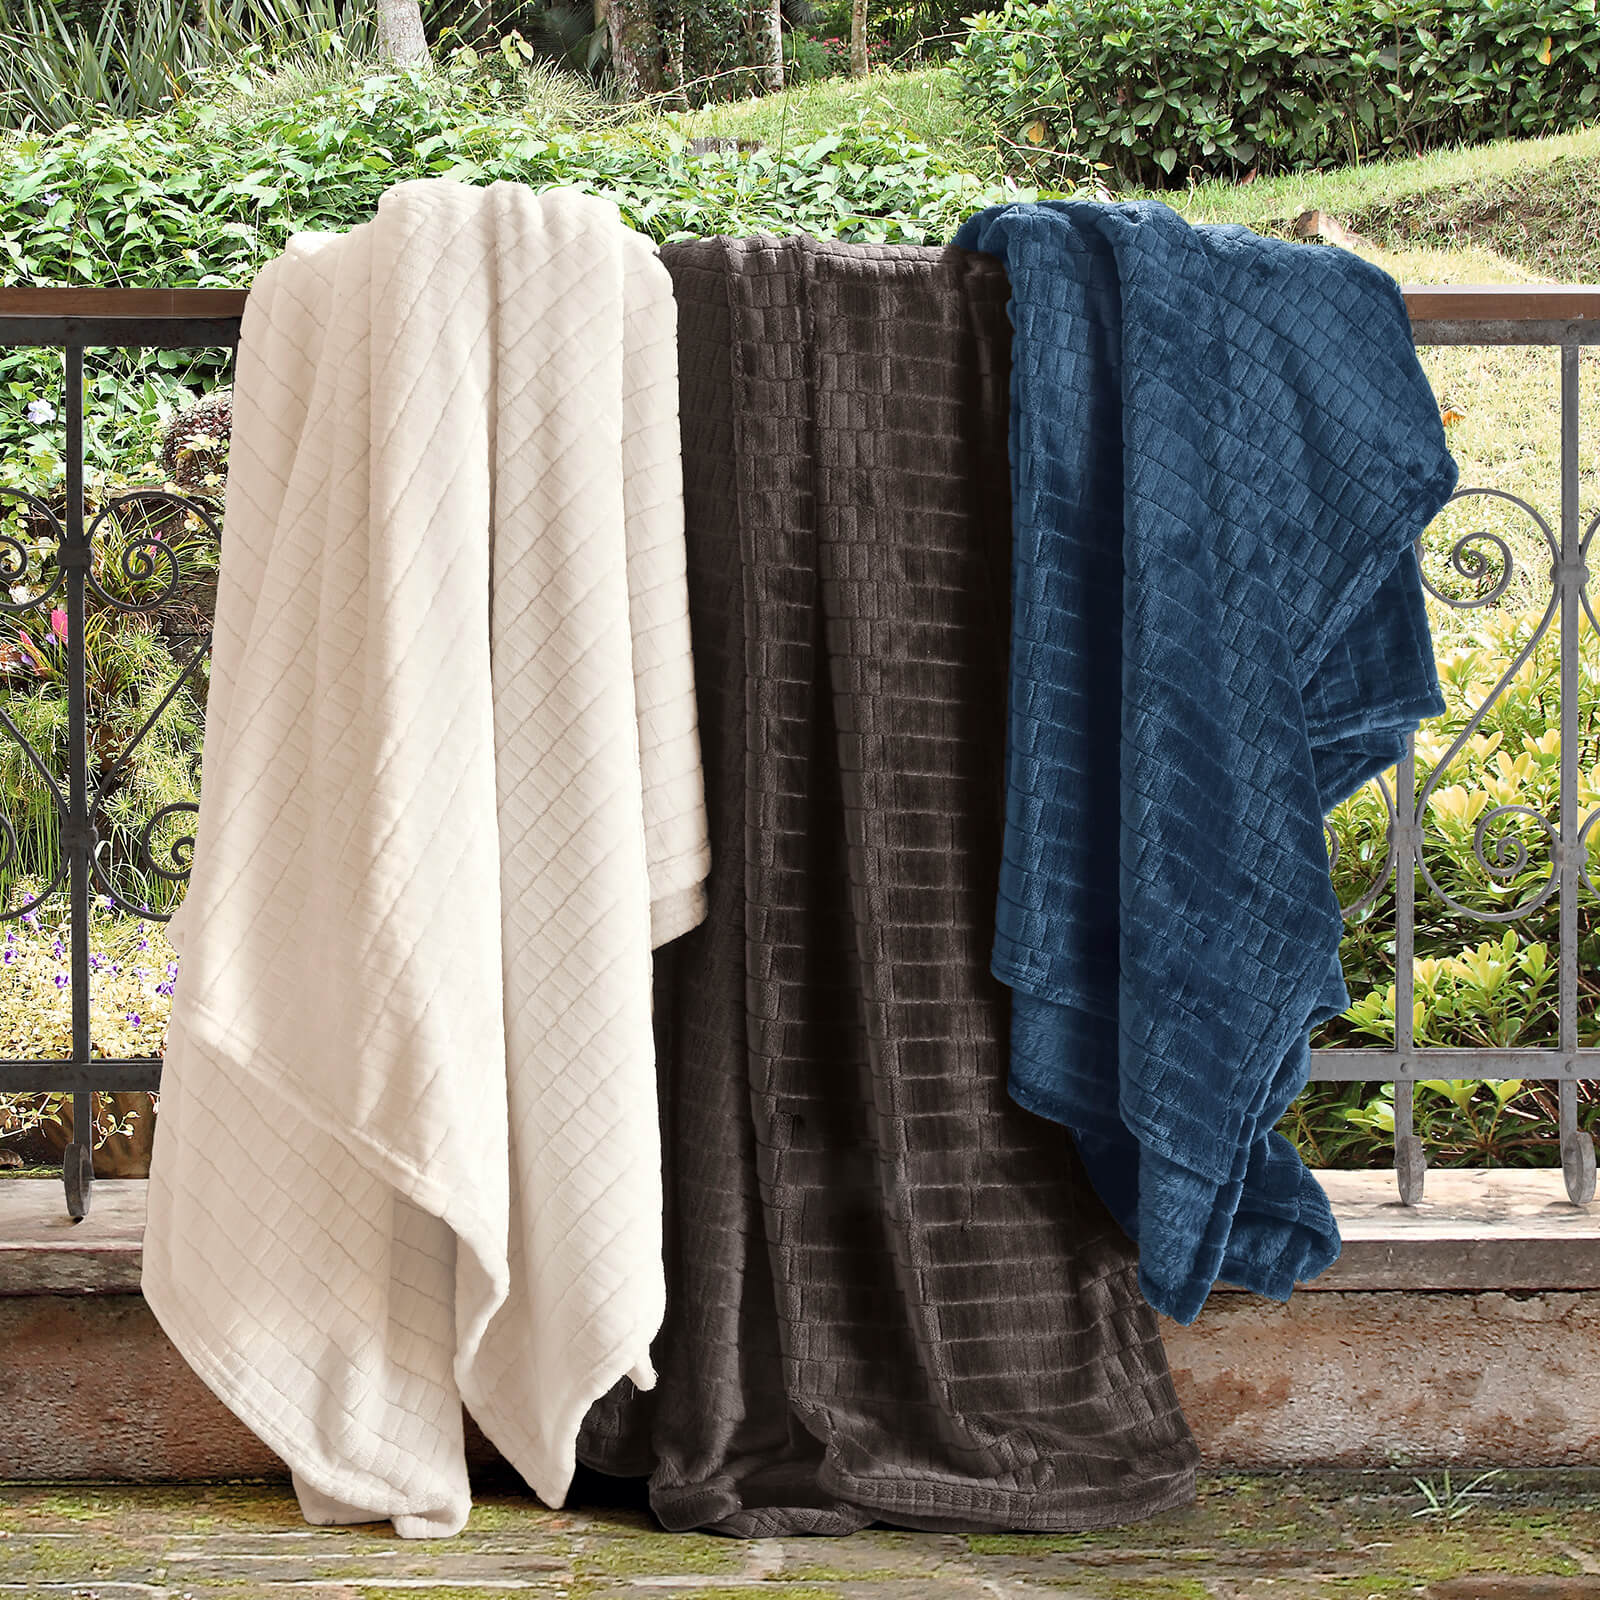 Cobertor Queen Manta Fleece Microfibra Coberta 2,35x1,80M Toque Seda Macio  Marinho